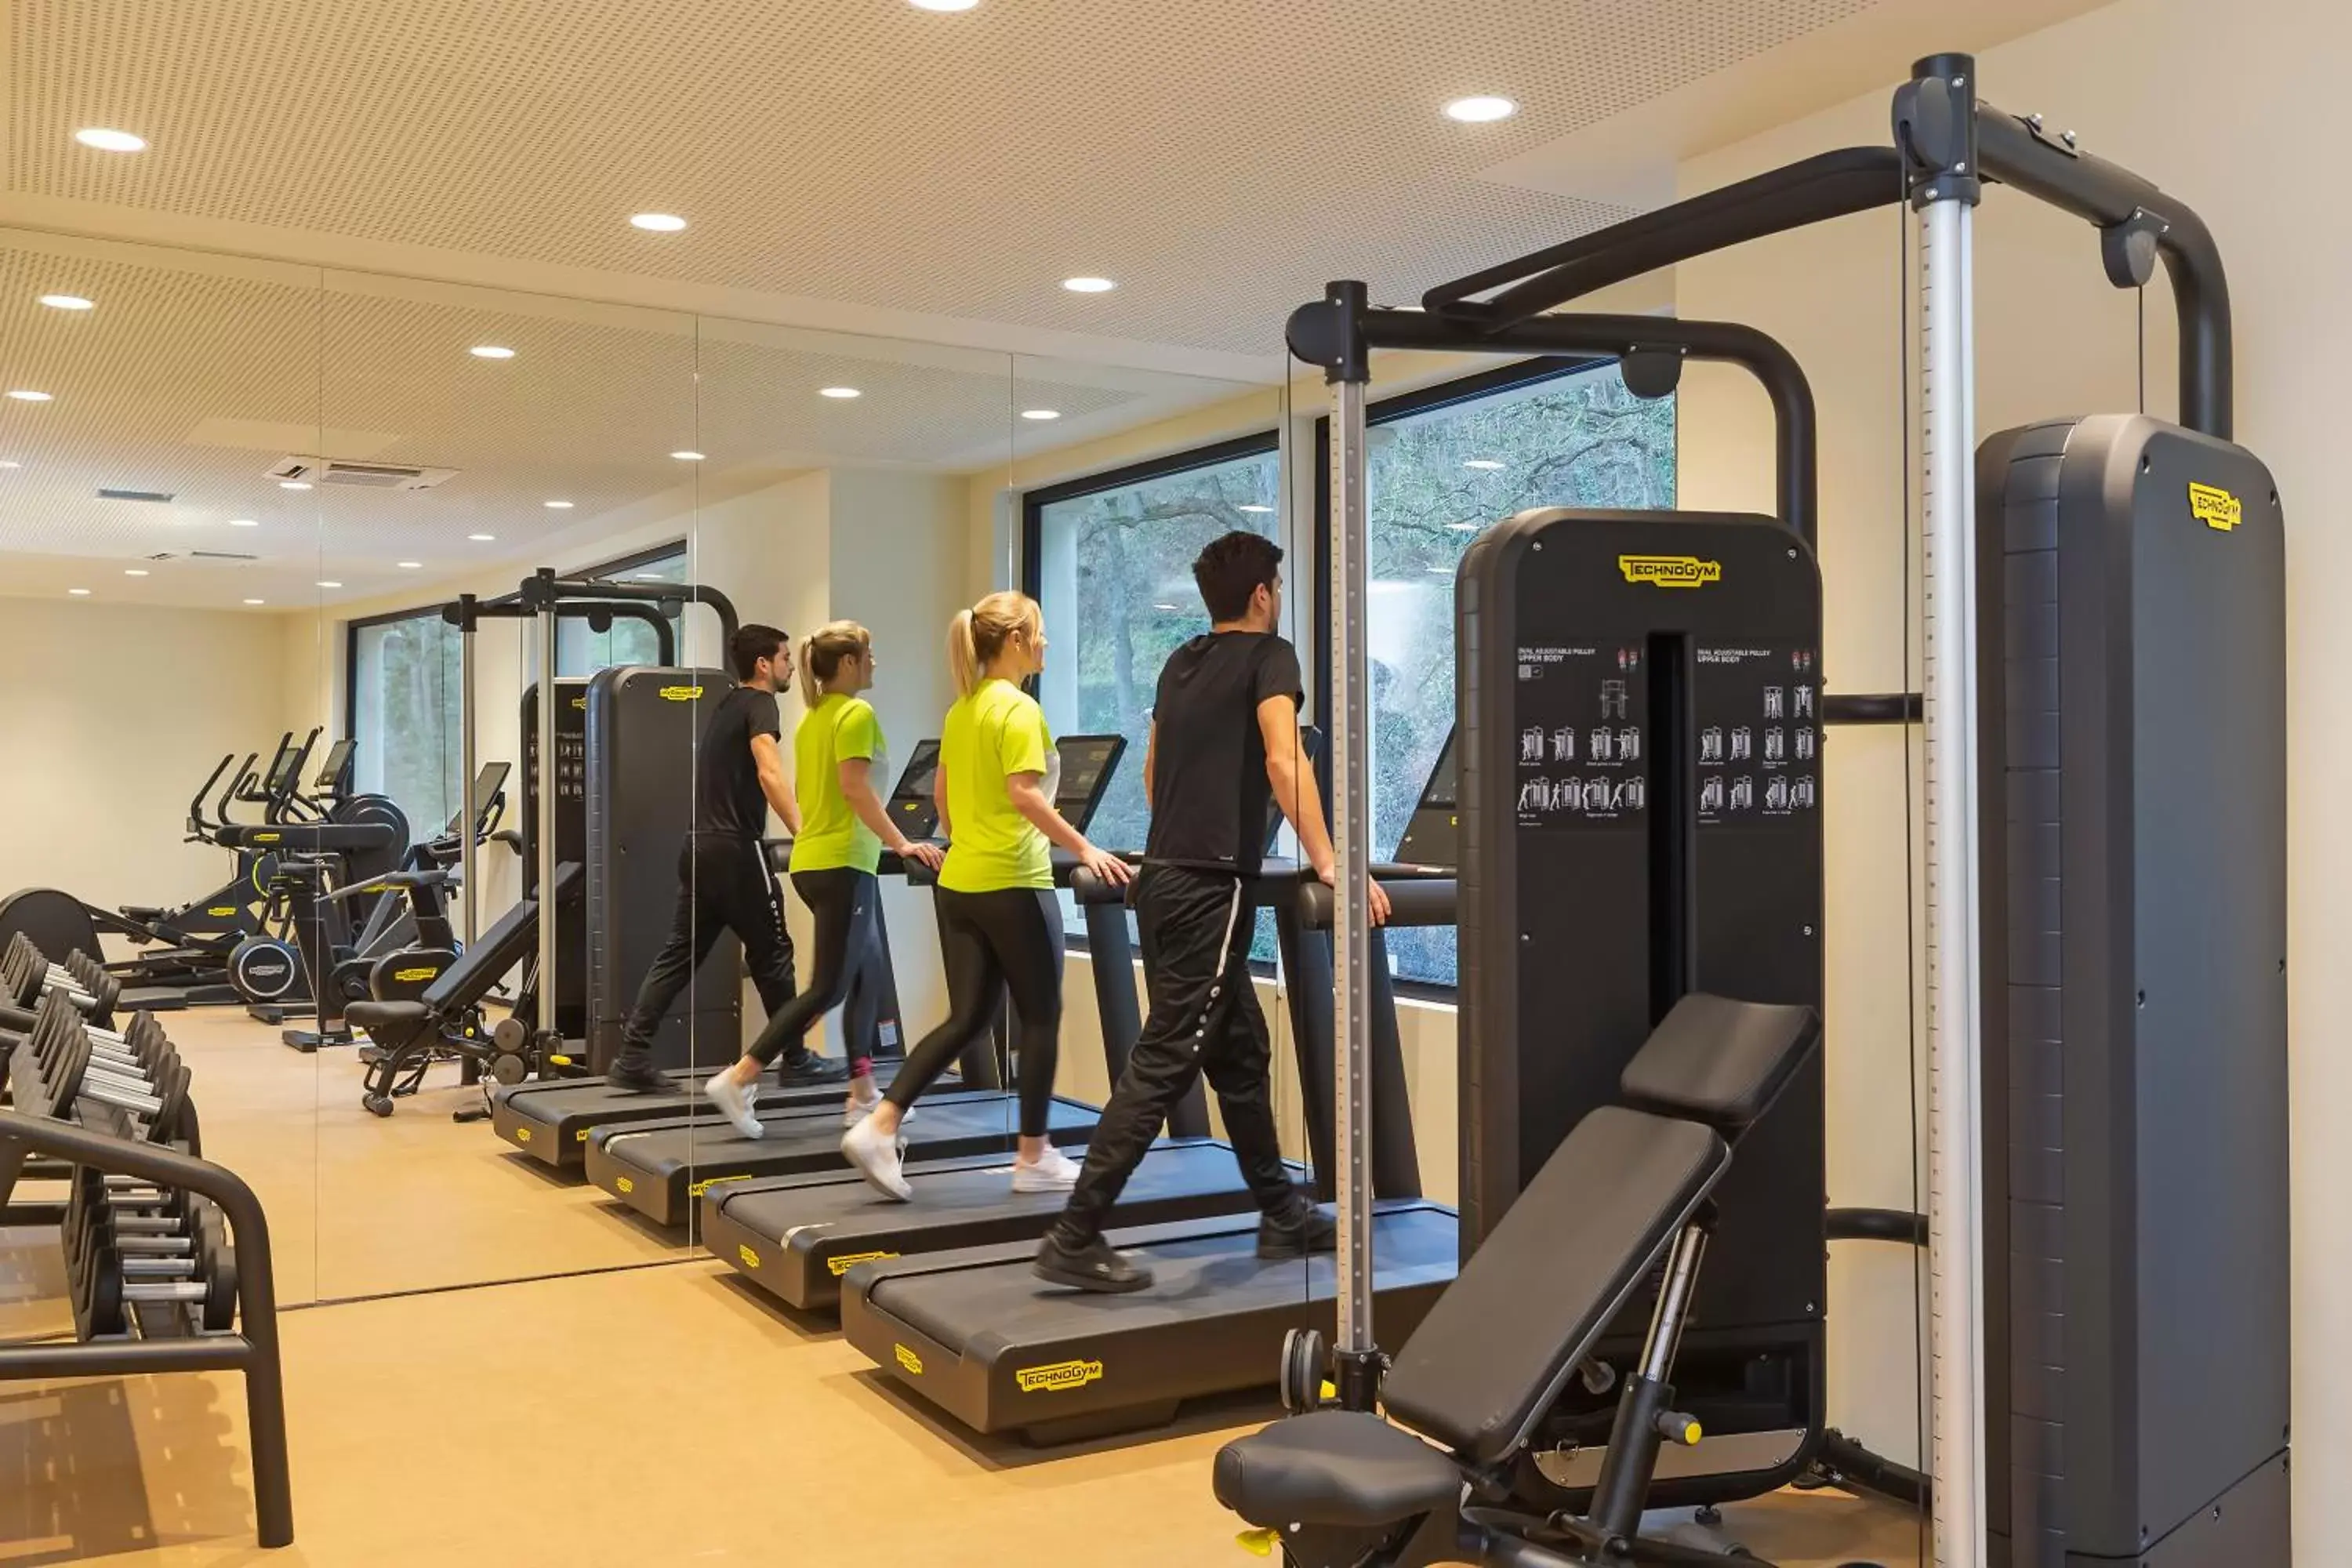 Fitness centre/facilities, Fitness Center/Facilities in Mercure Namur Hotel